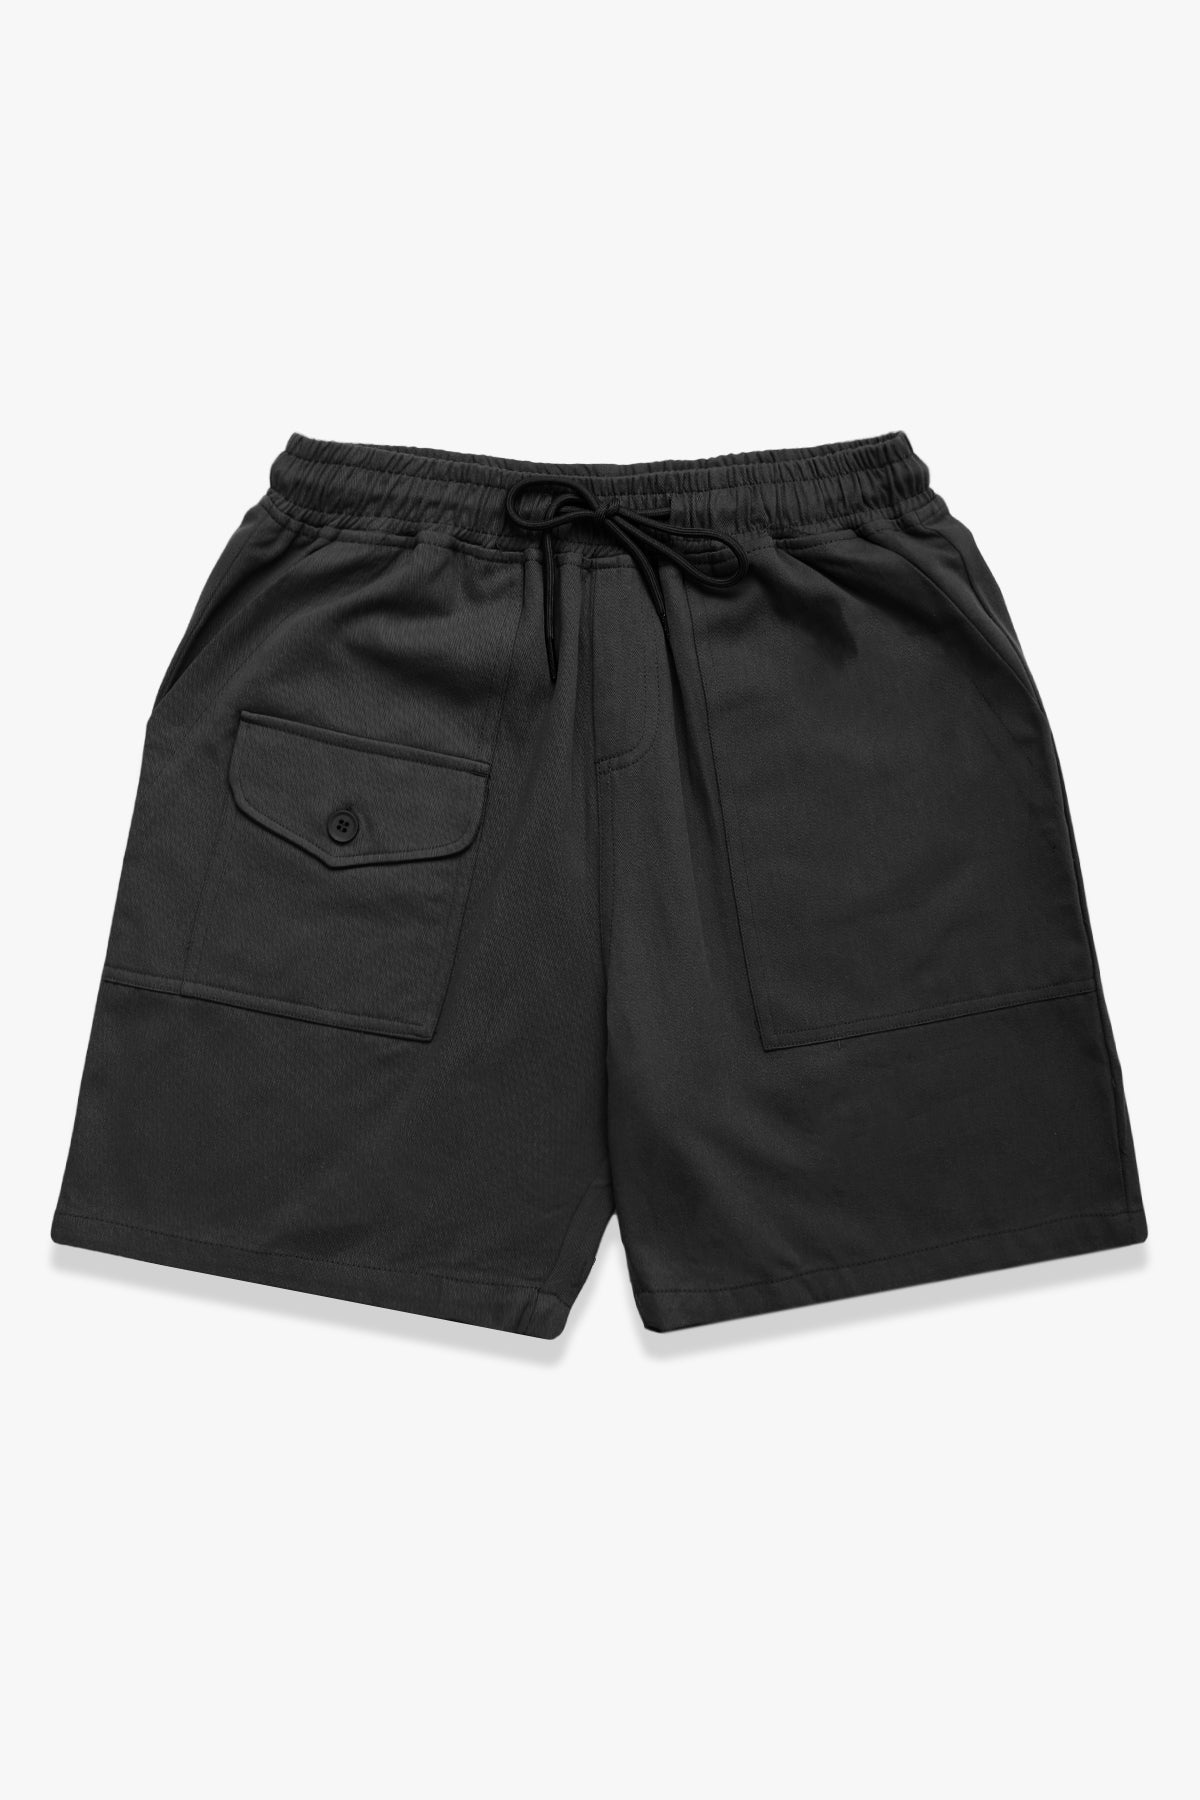 Blacksmith - Beach Cargo Shorts - Black | Blacksmith Store